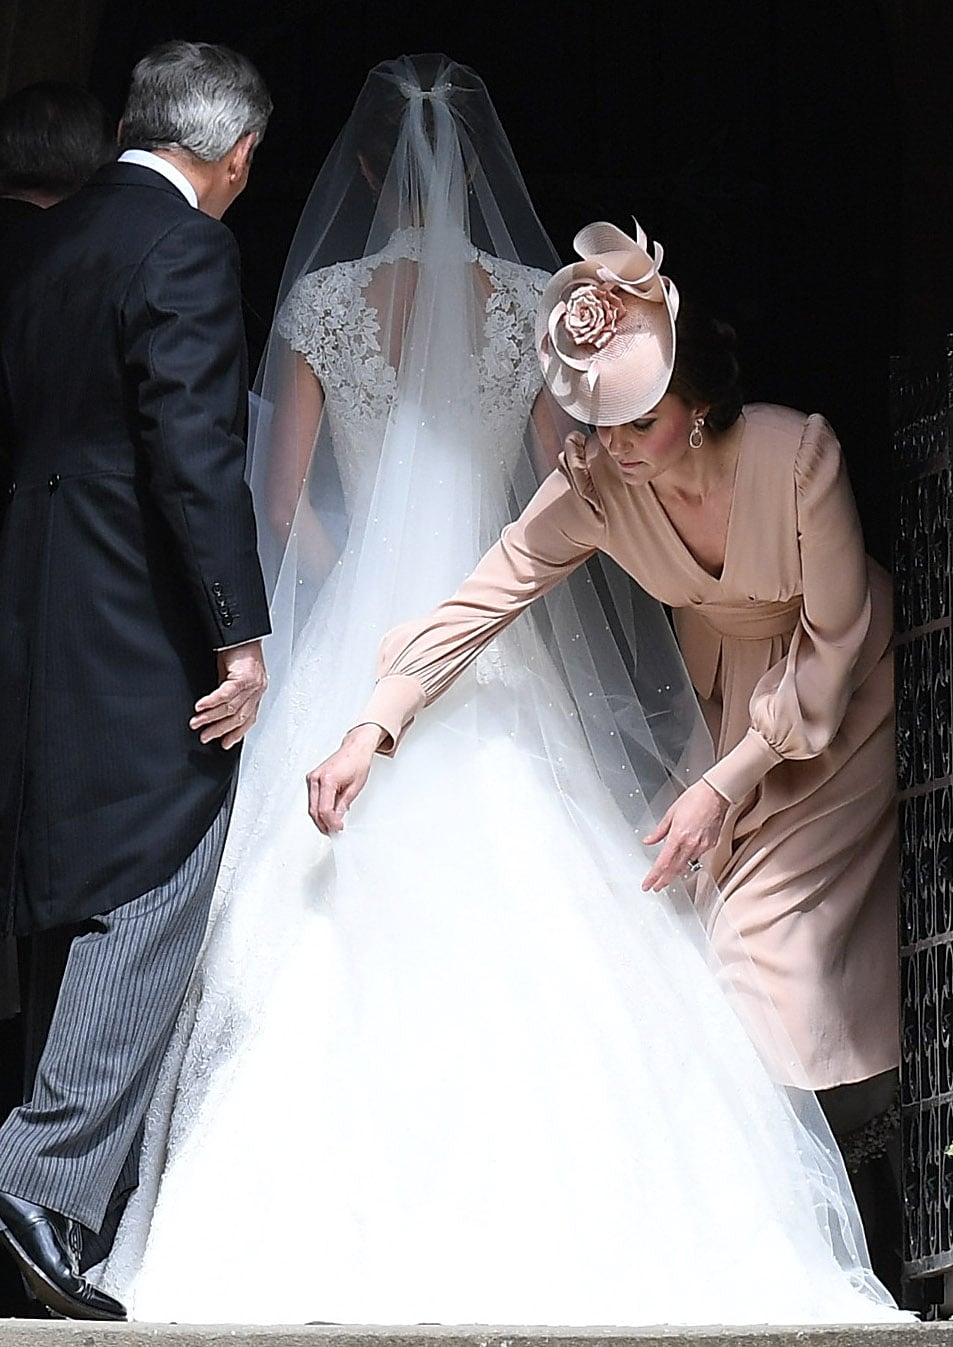 Kate Middleton Alexander McQueen Dress at Pippa's Wedding | POPSUGAR Fashion